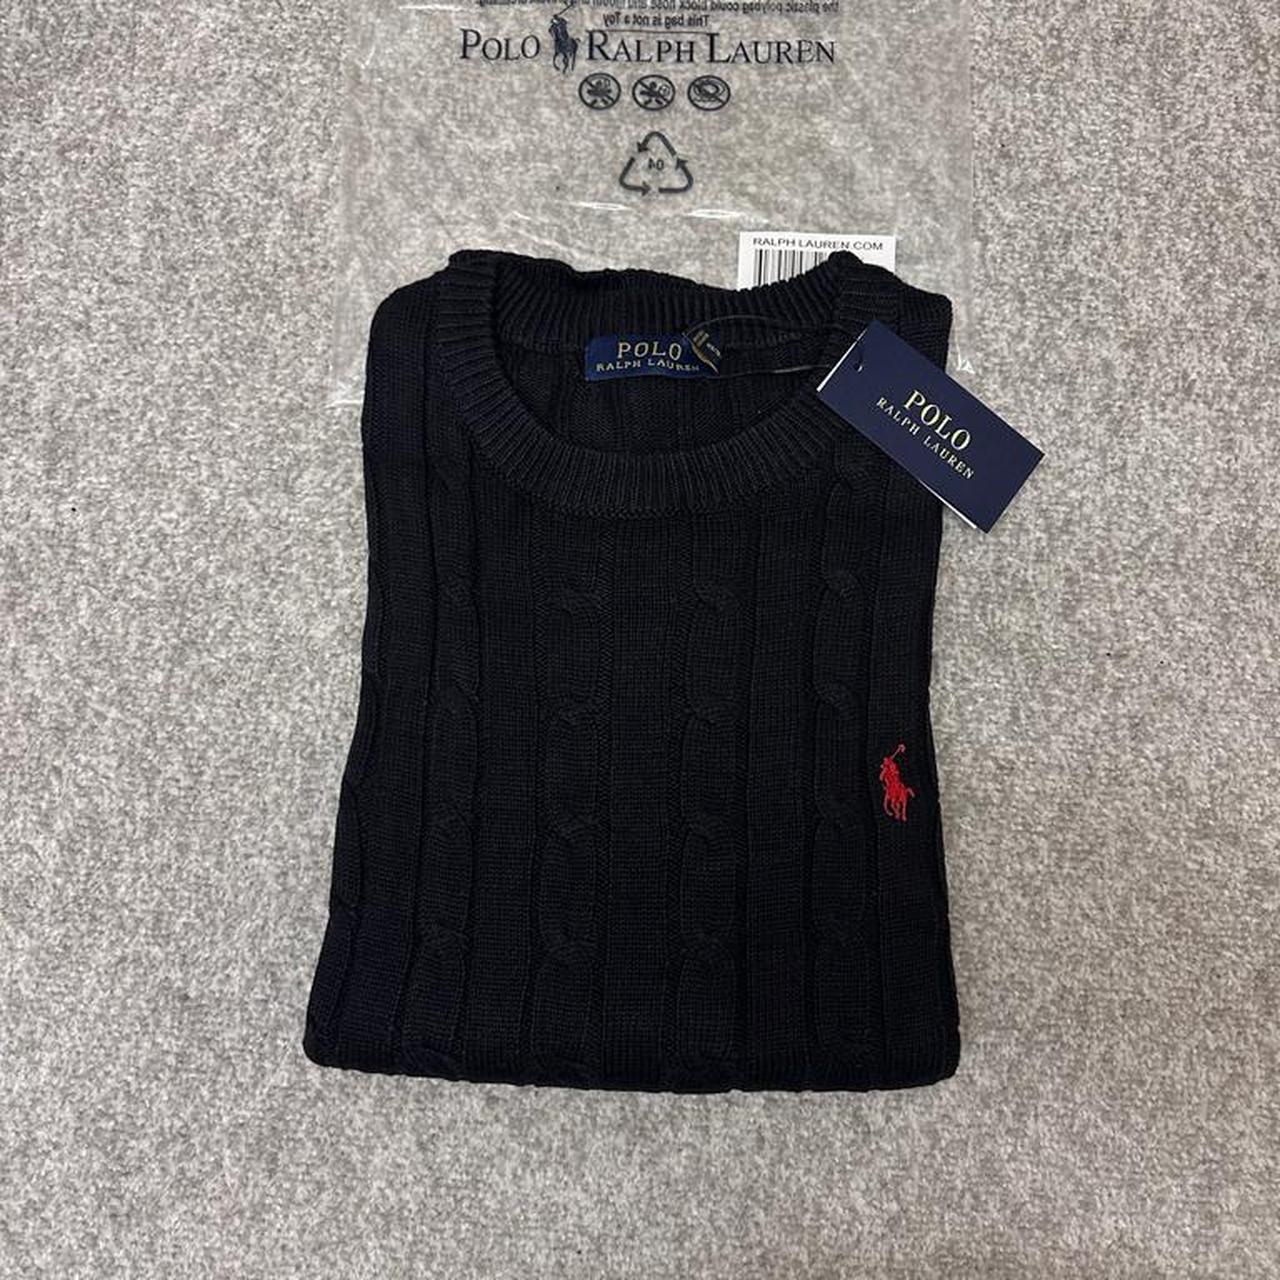 Ralph Lauren cable knitted jumper. Fabric- Cotton... - Depop